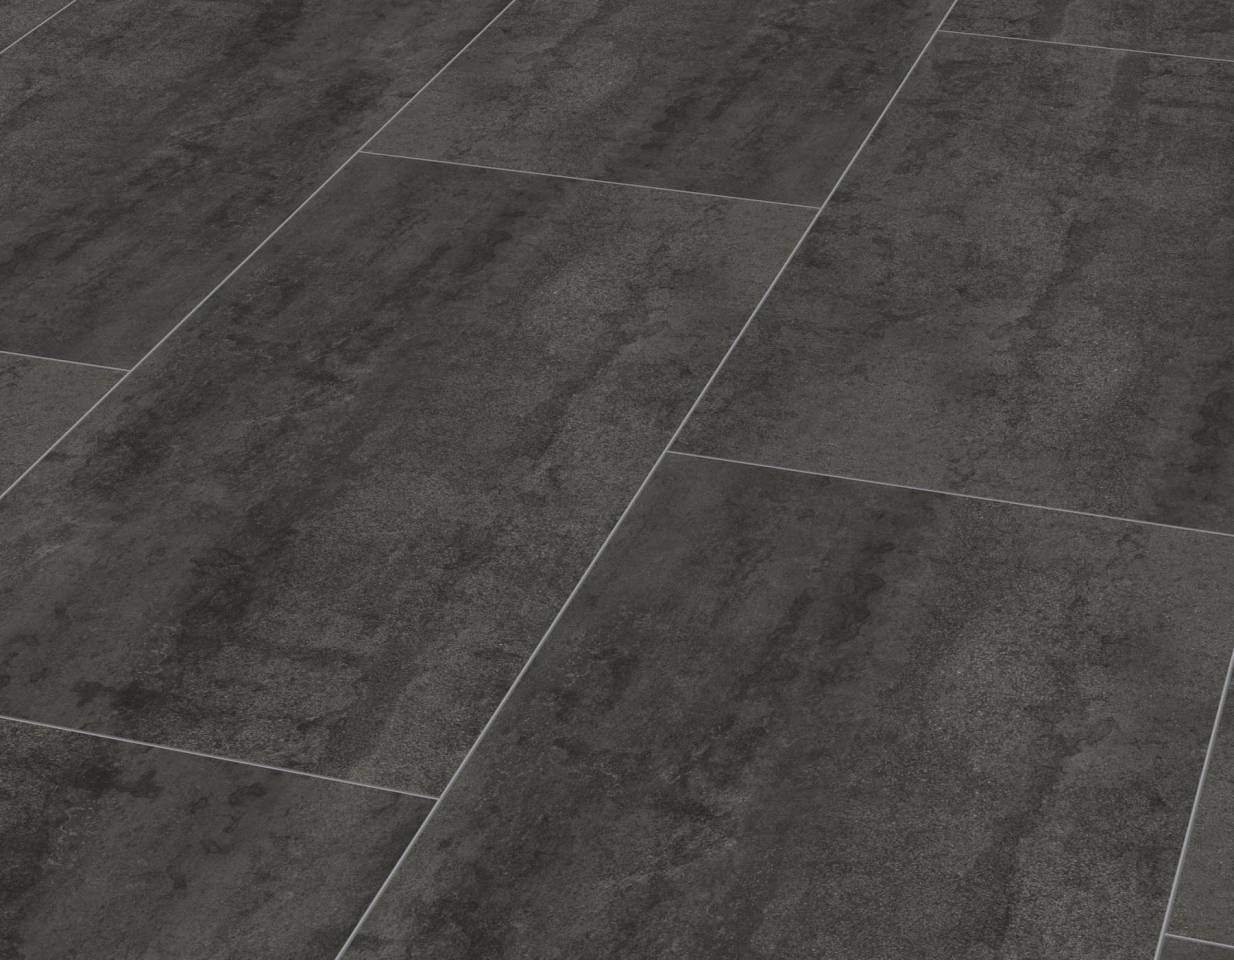 Kronotex senia stone laminate floor tiles